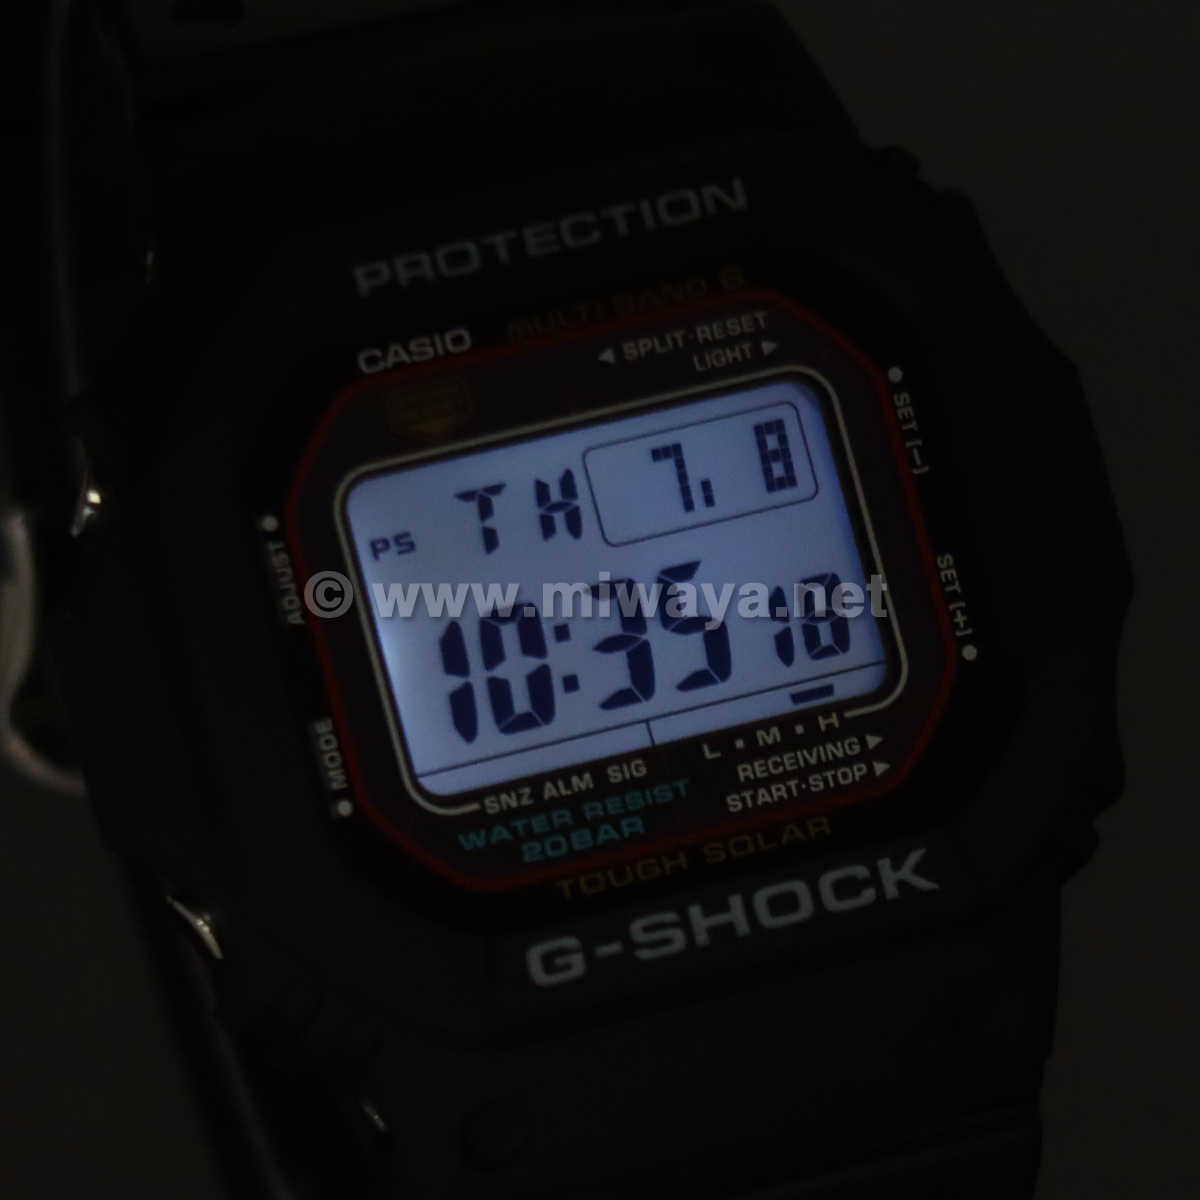 G-SHOCK M5610U-1CJF